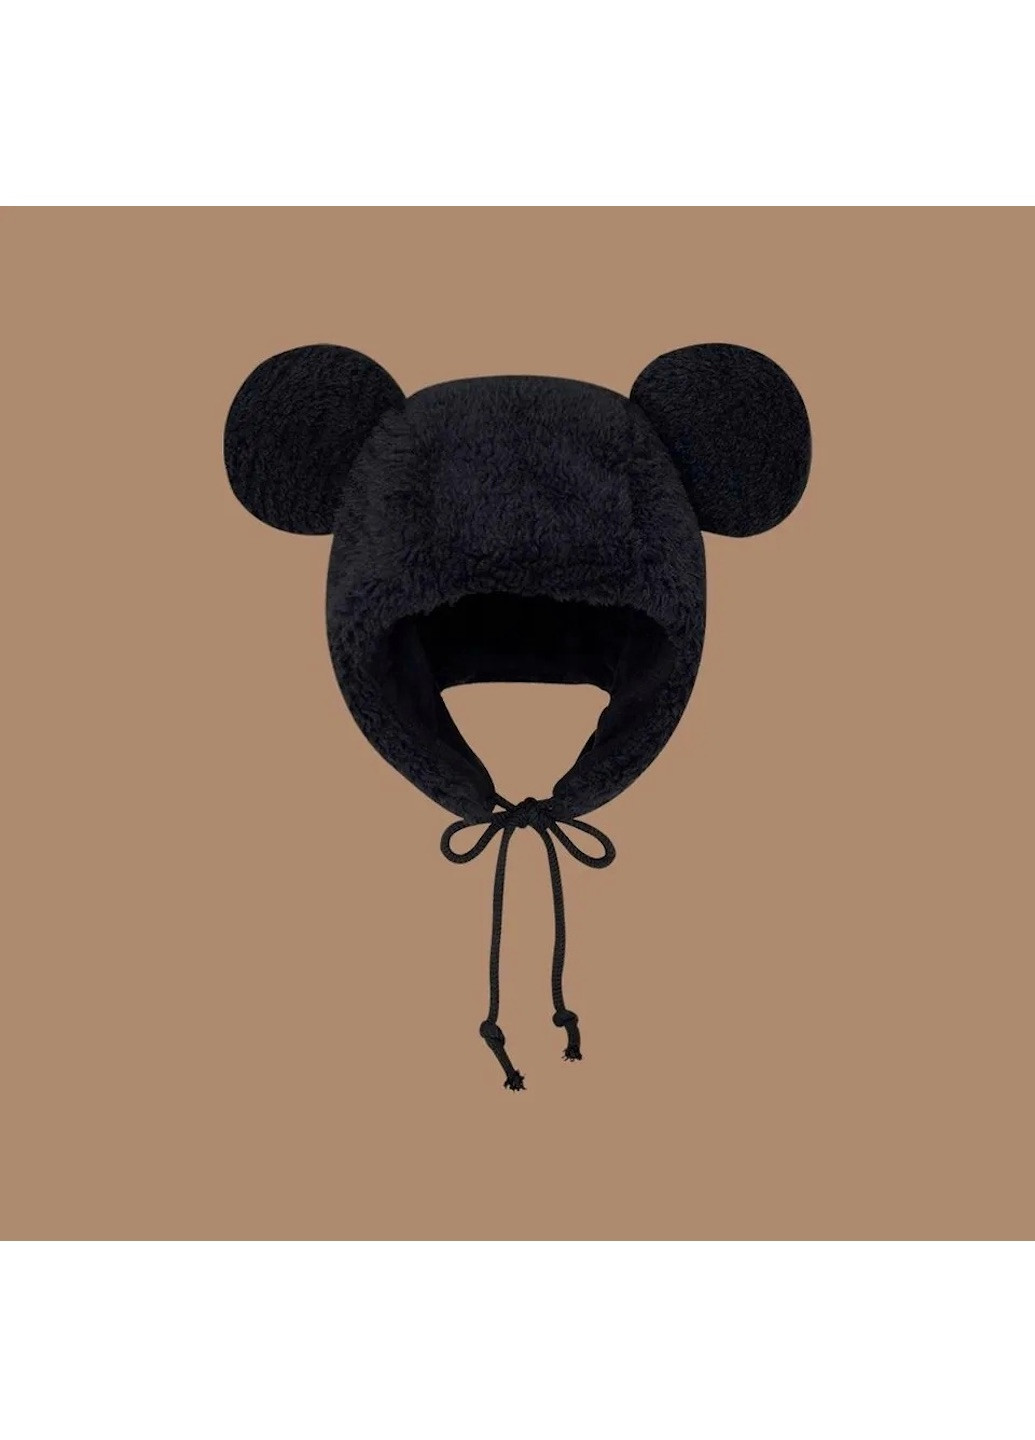 Шапка-ушанка Wuke Медведь с ушками с завязками унисекс one size Черный Brand шапка-вушанка (257226441)